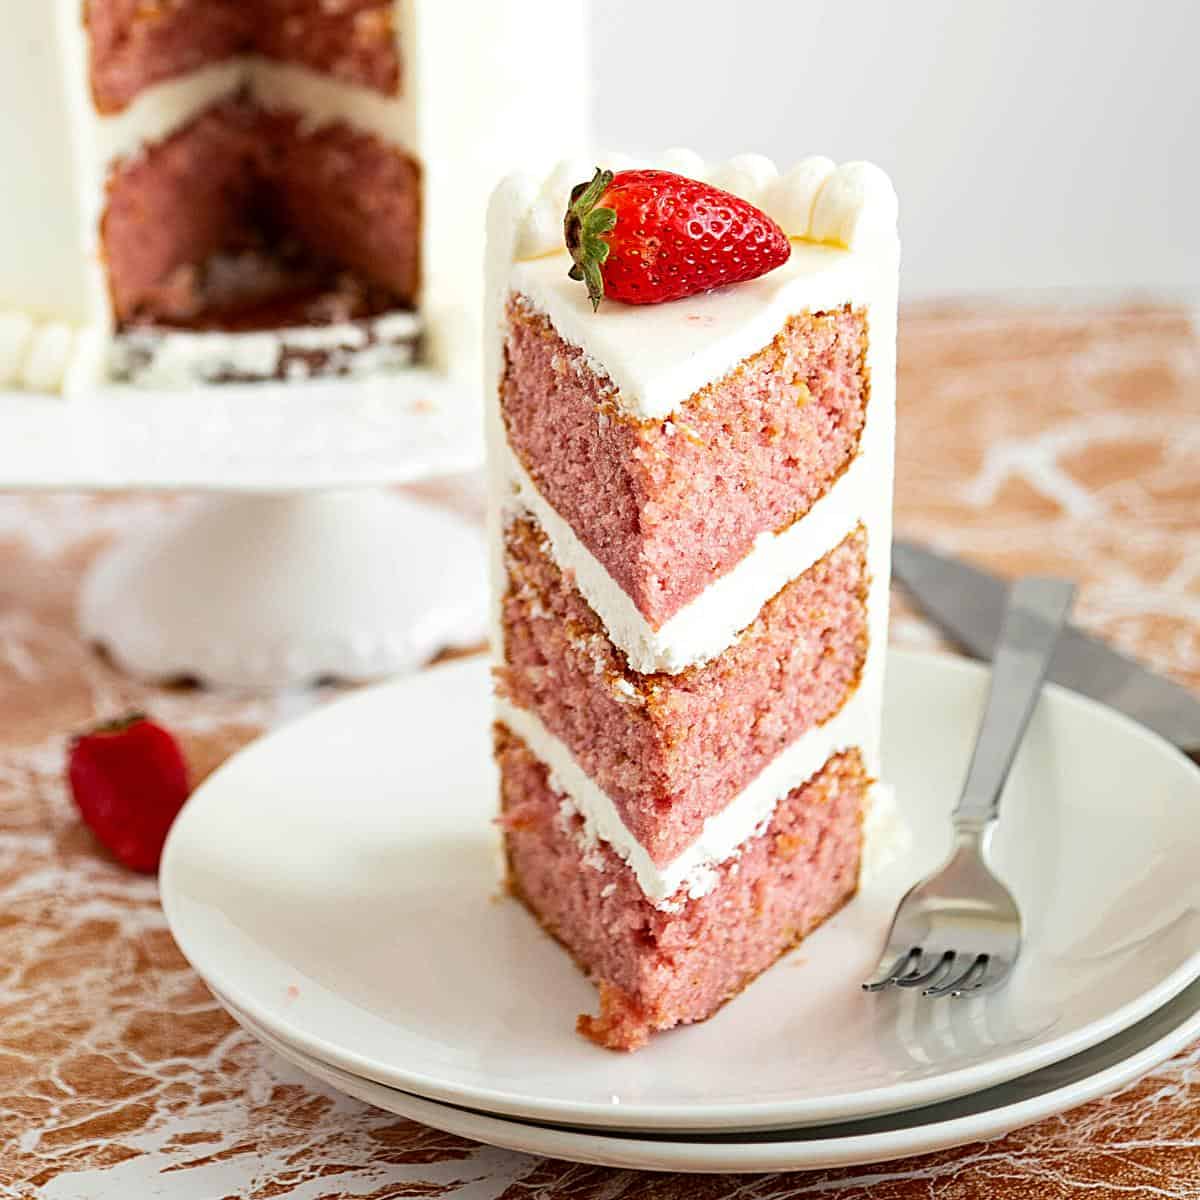 A slice of strawberry cake.